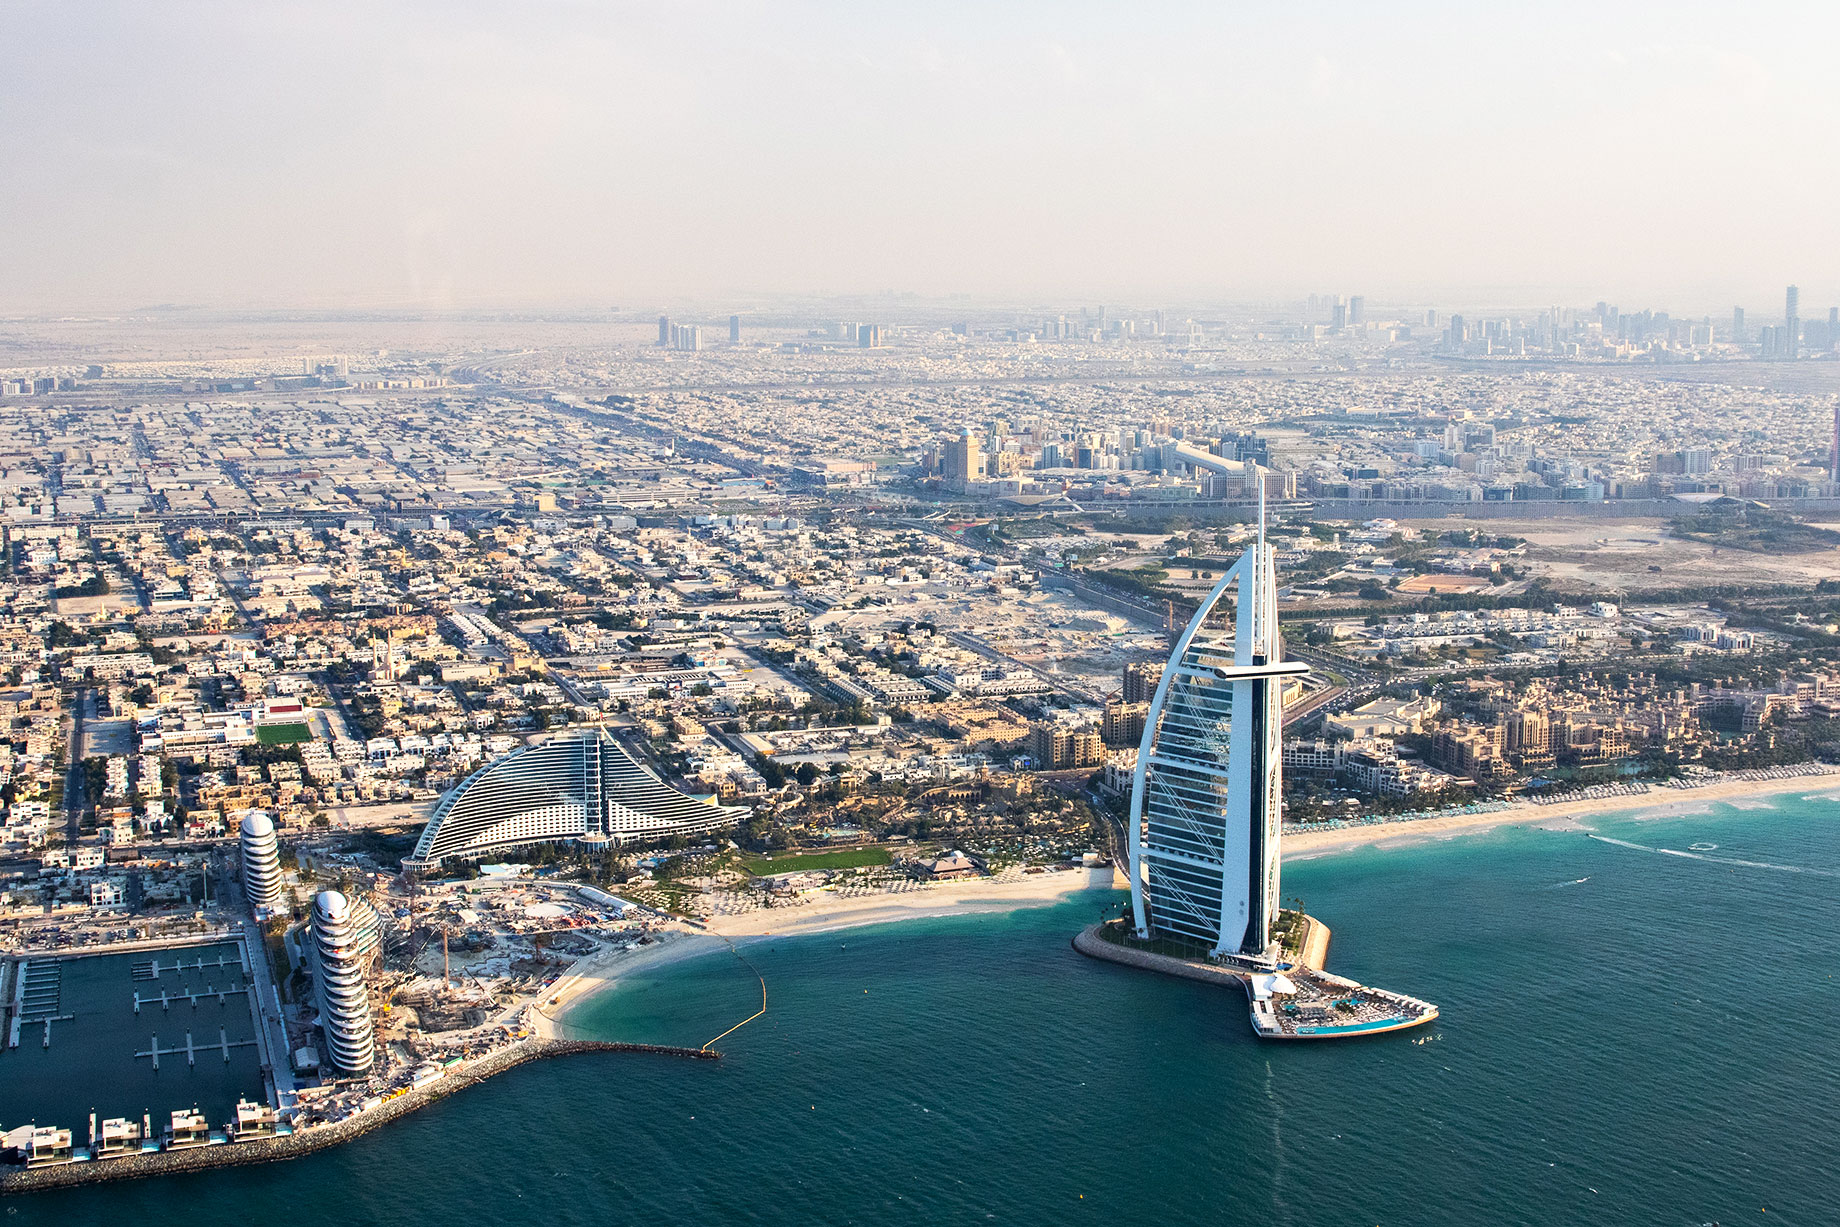 Burj Al Arab – Dubai, United Arab Emirates